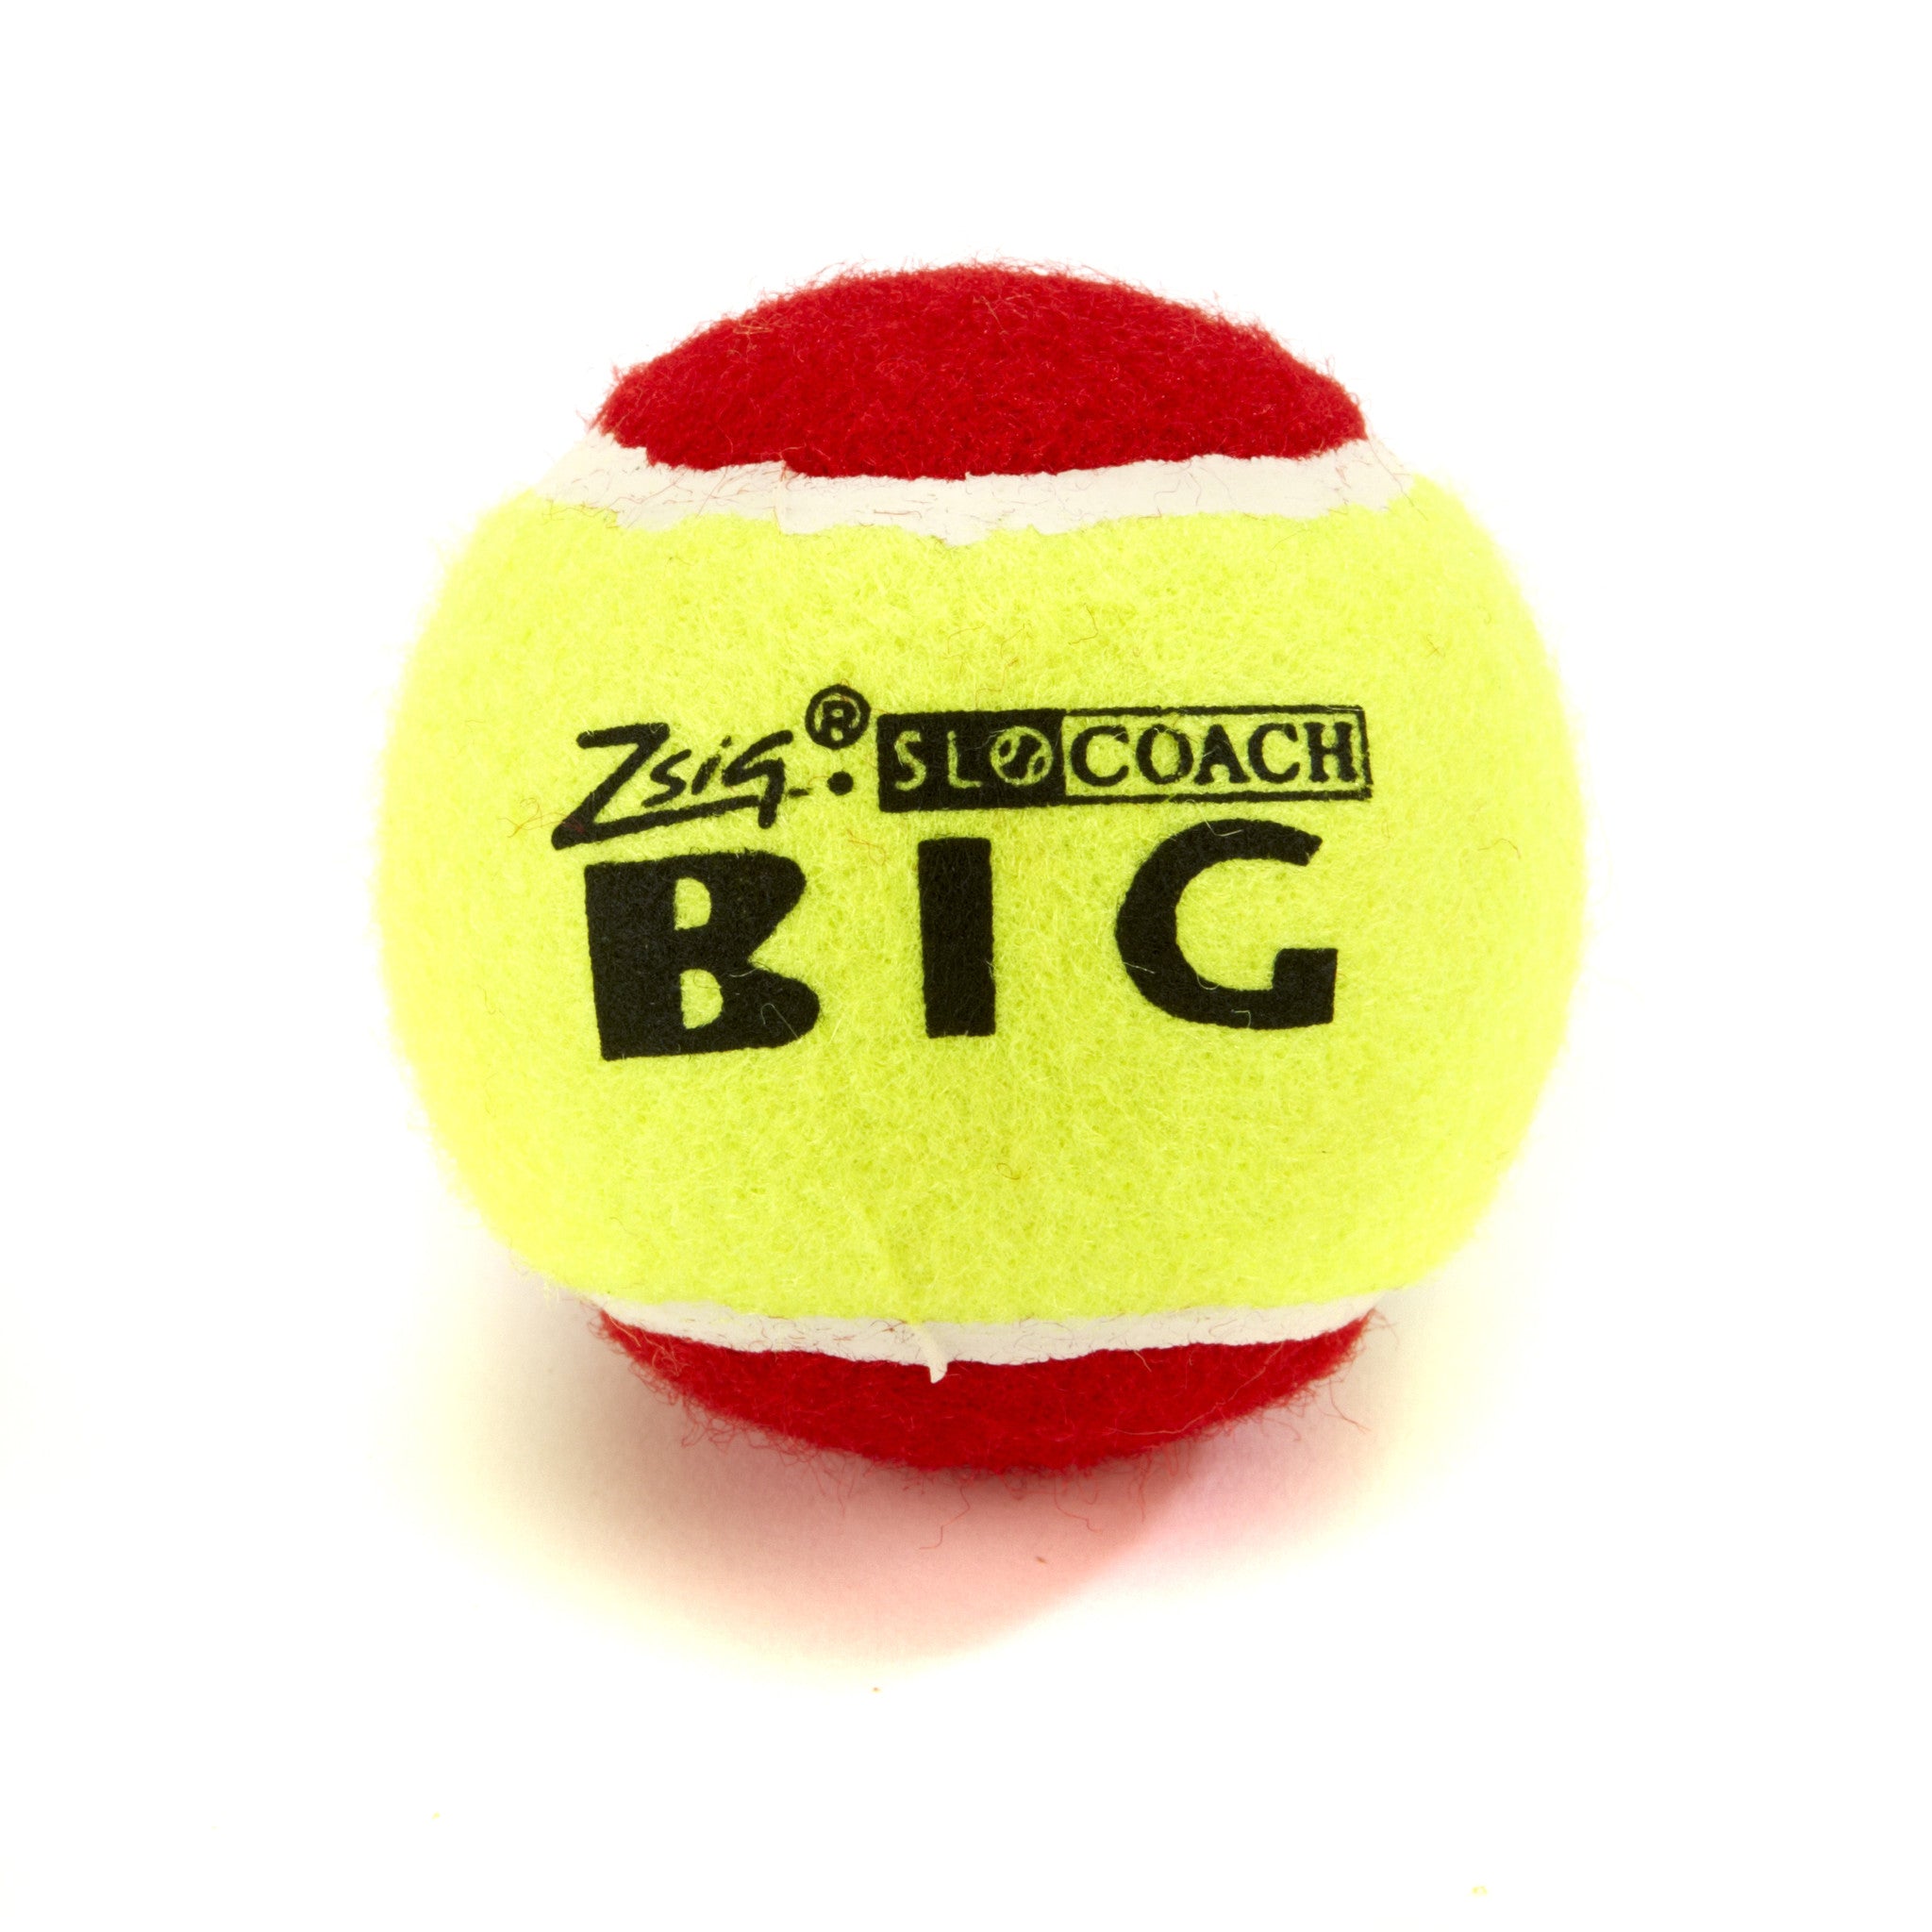 Zsig Slocoach Big Red Mini Tennis single ball